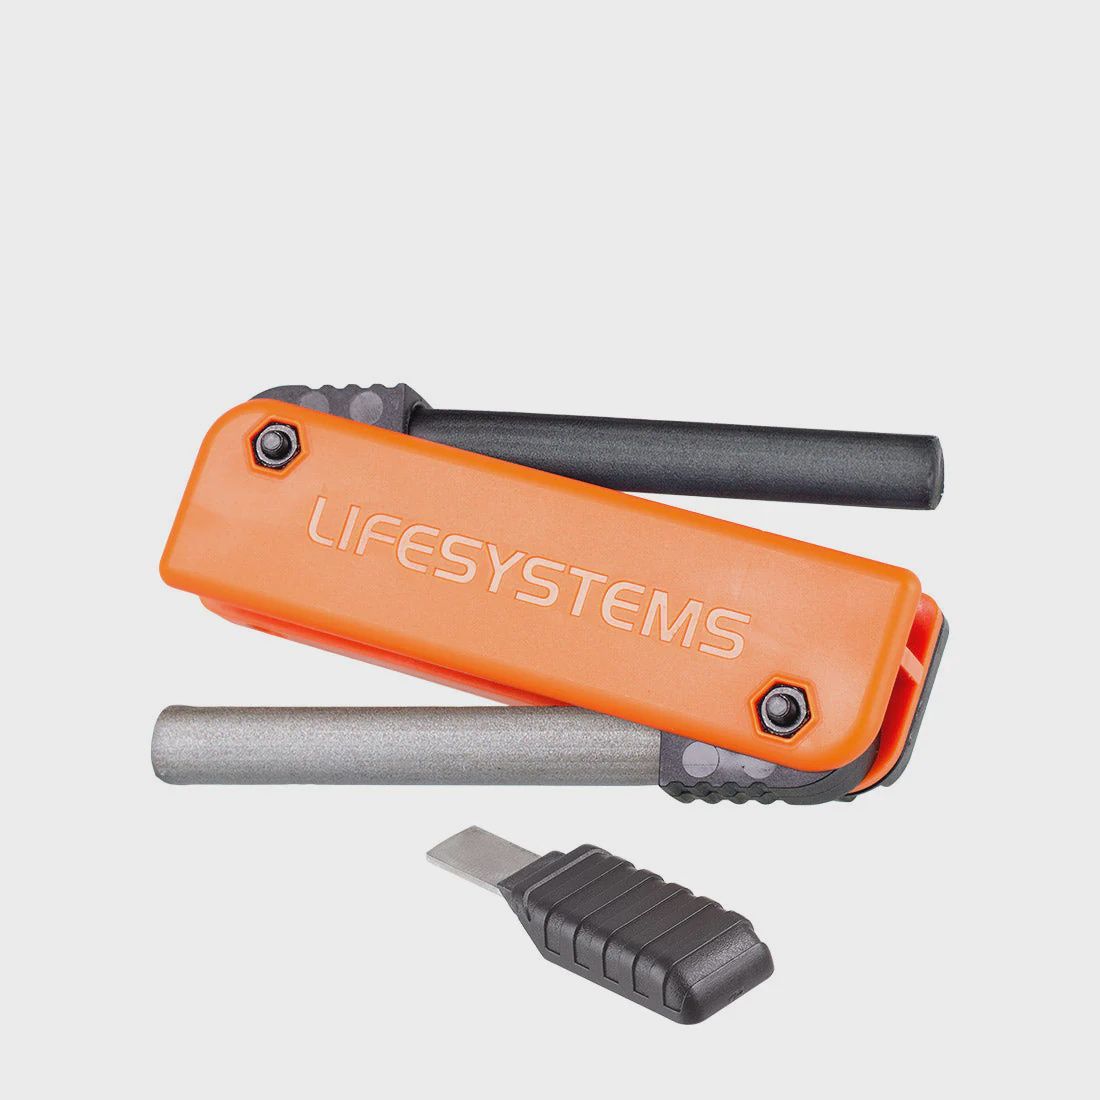 Lifesystem dual action fire starter, Colour: Orange